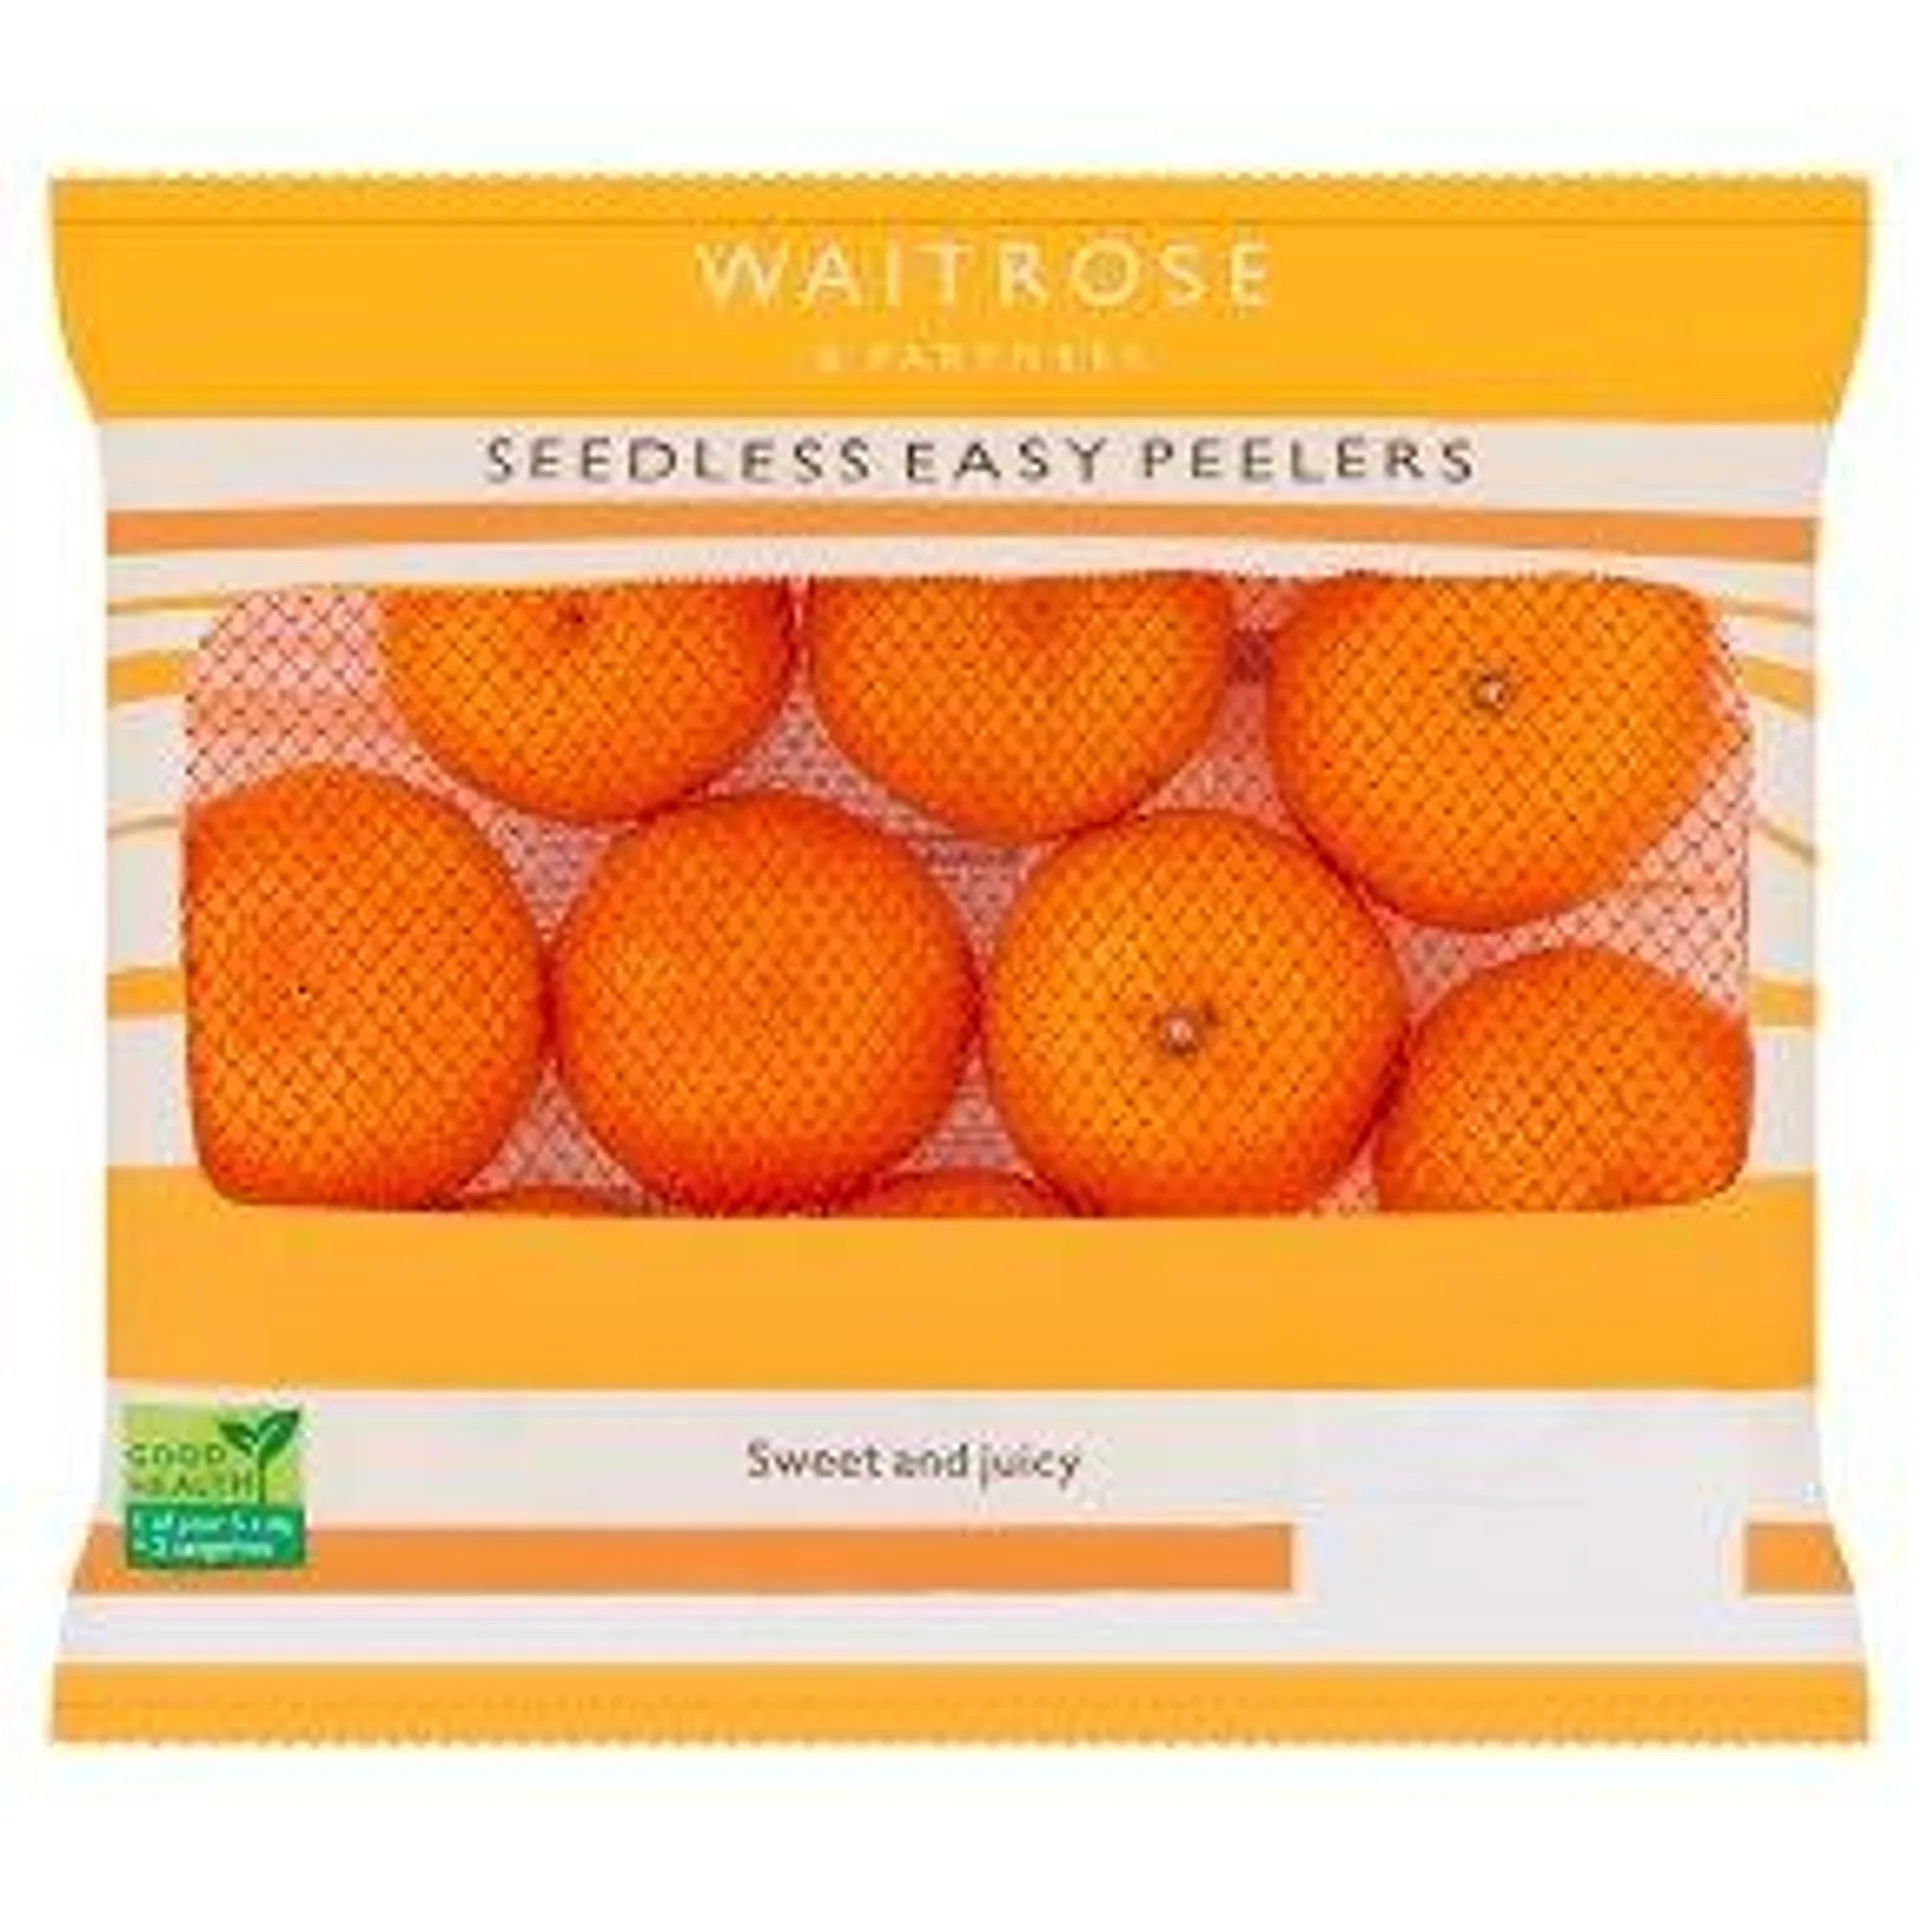 Waitrose Seedless Easy Peelers